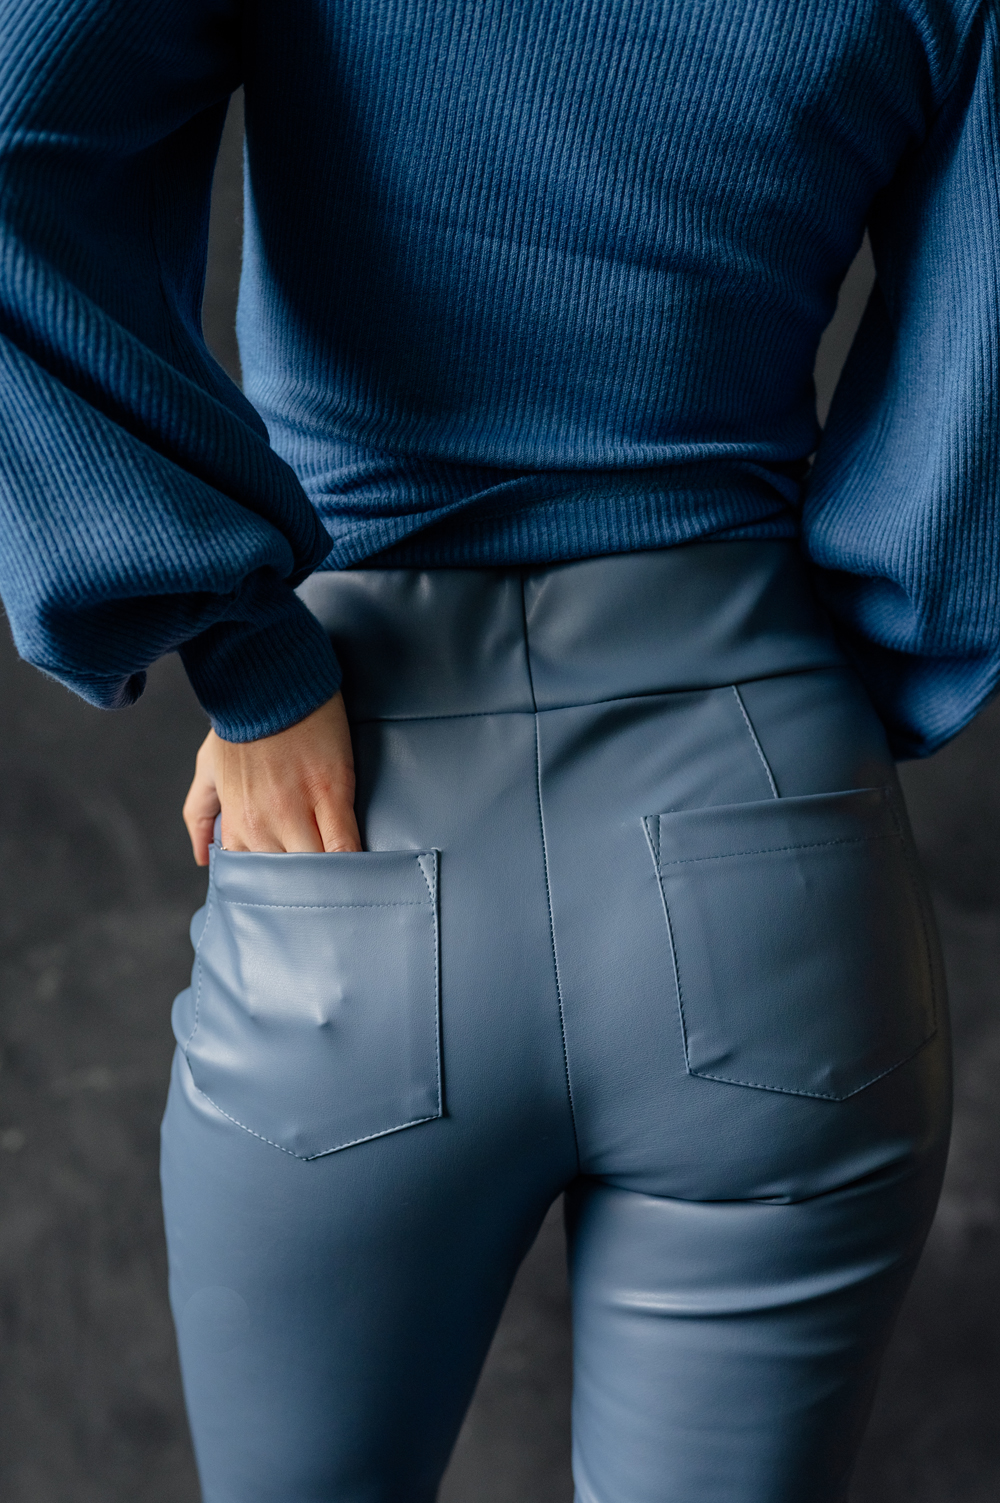 Gray-blue leather leggings on fleece